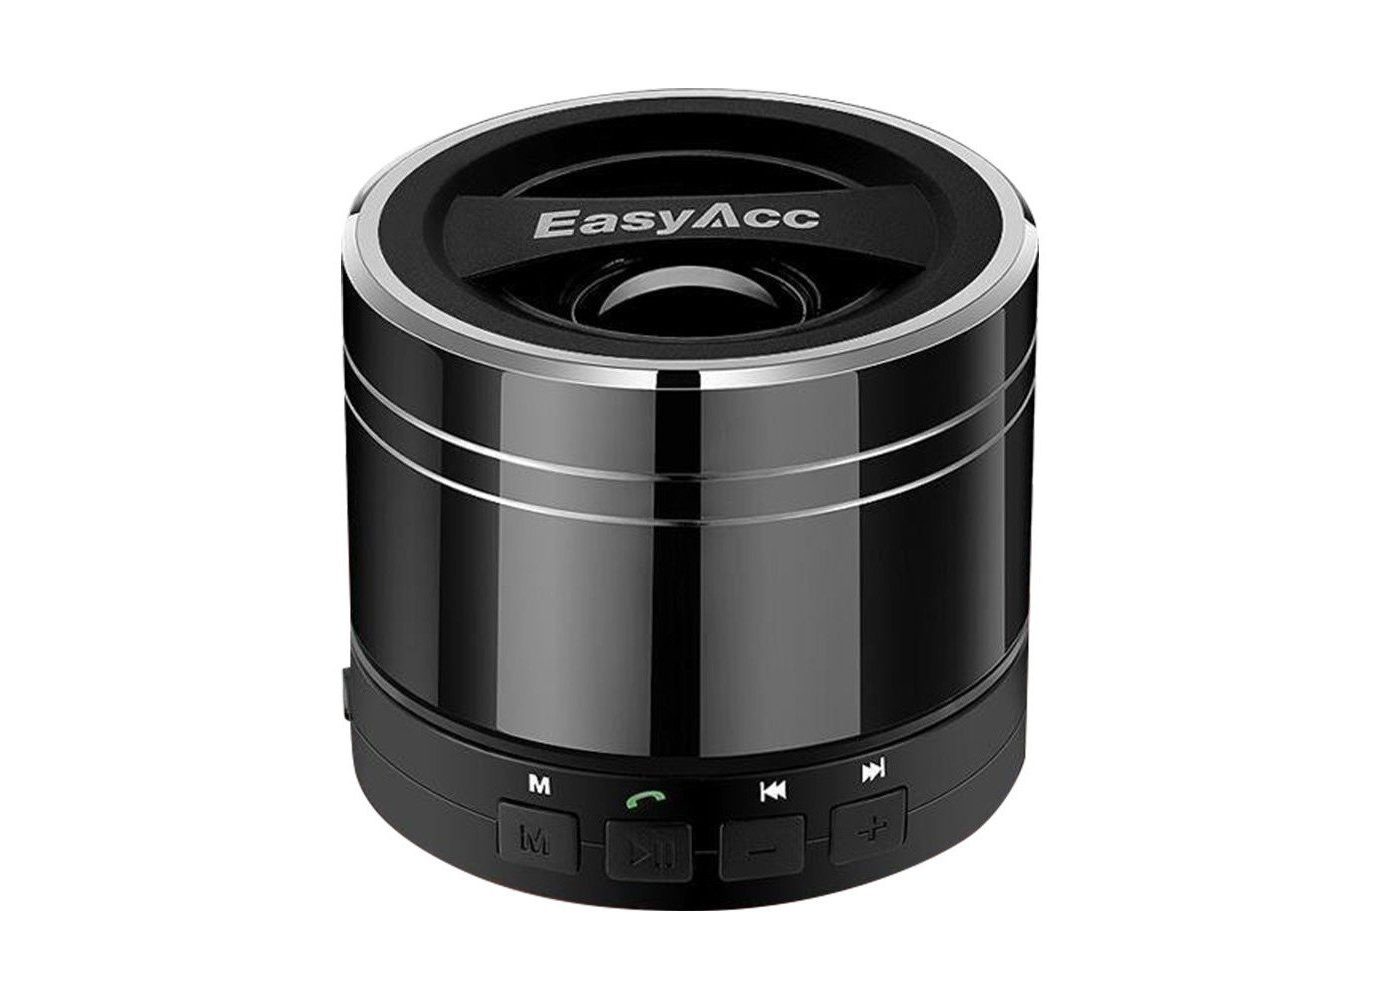 Style + Design electronics camera lens product product design cameras & optics camera accessory lens multimedia hardware teleconverter angle